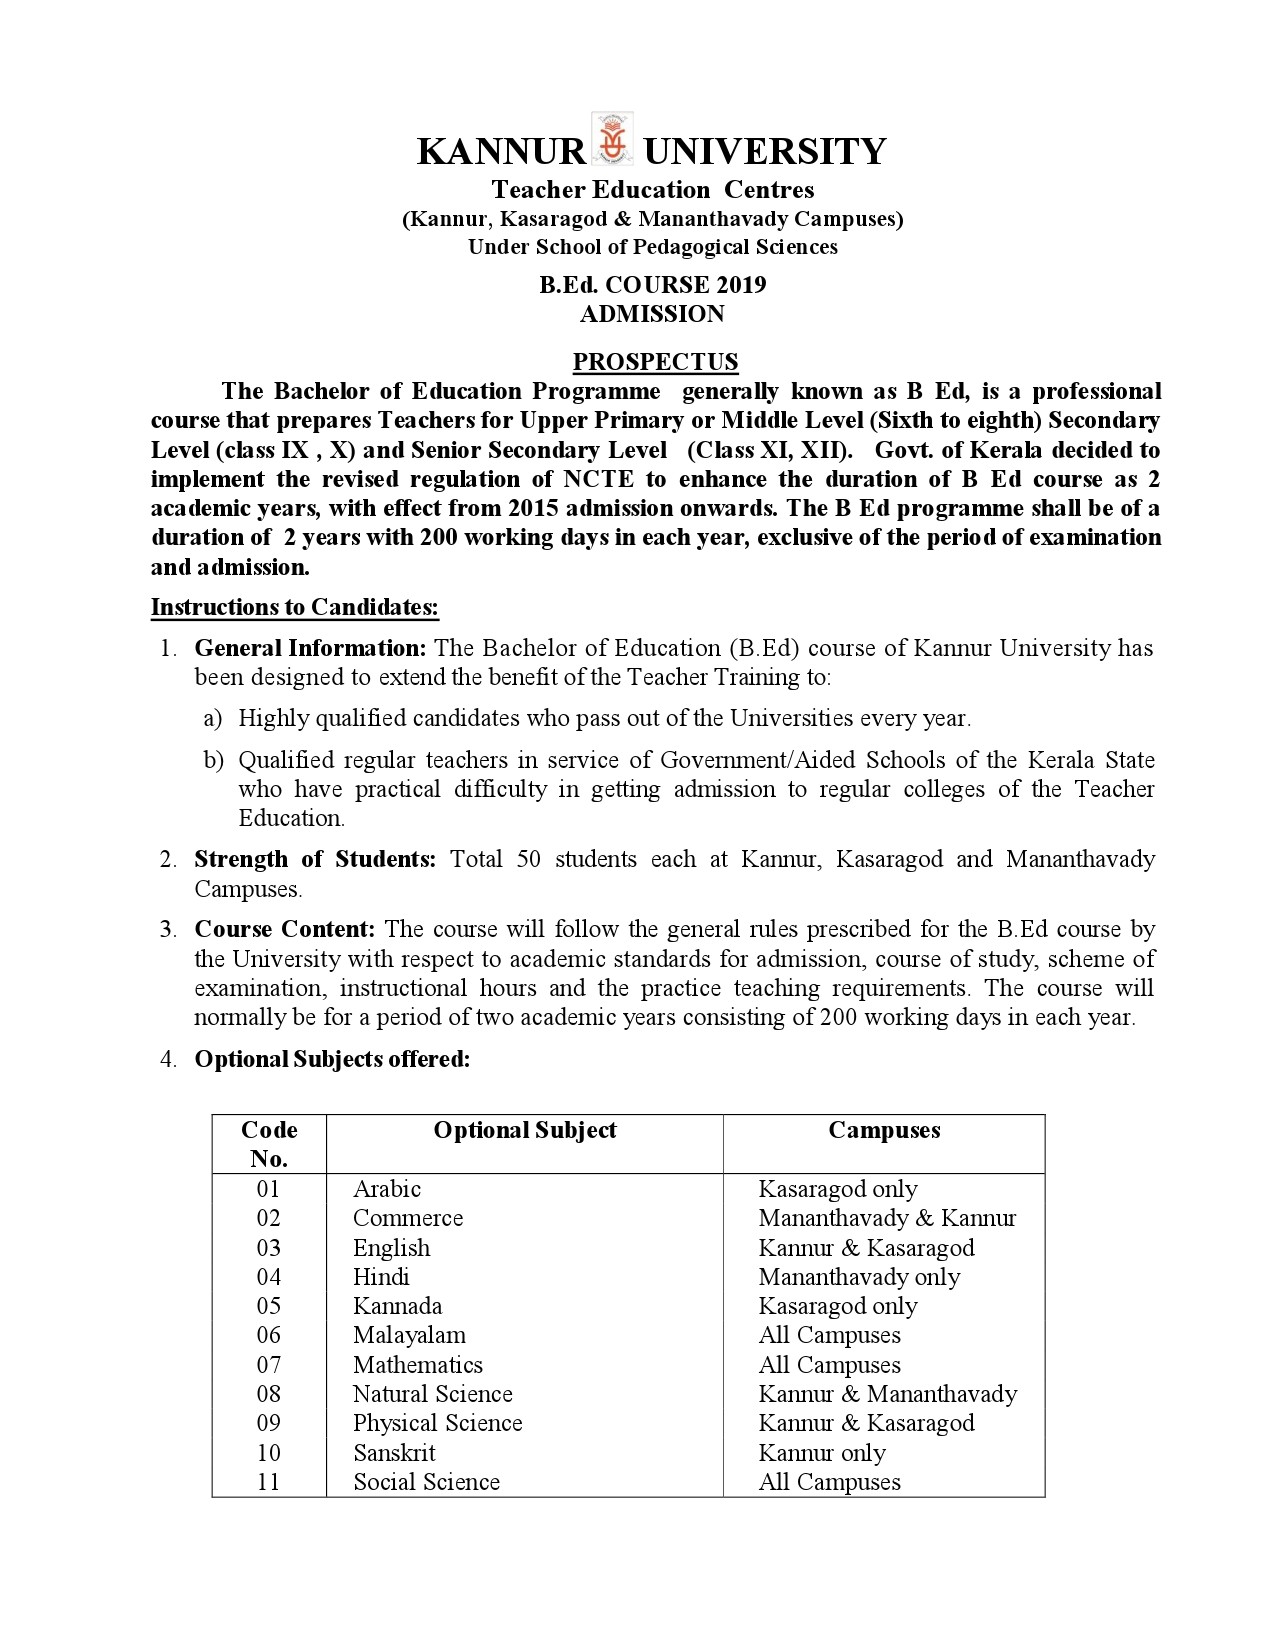 Kannur University B Ed Admission Prospectus 2019 - Notification Image 15